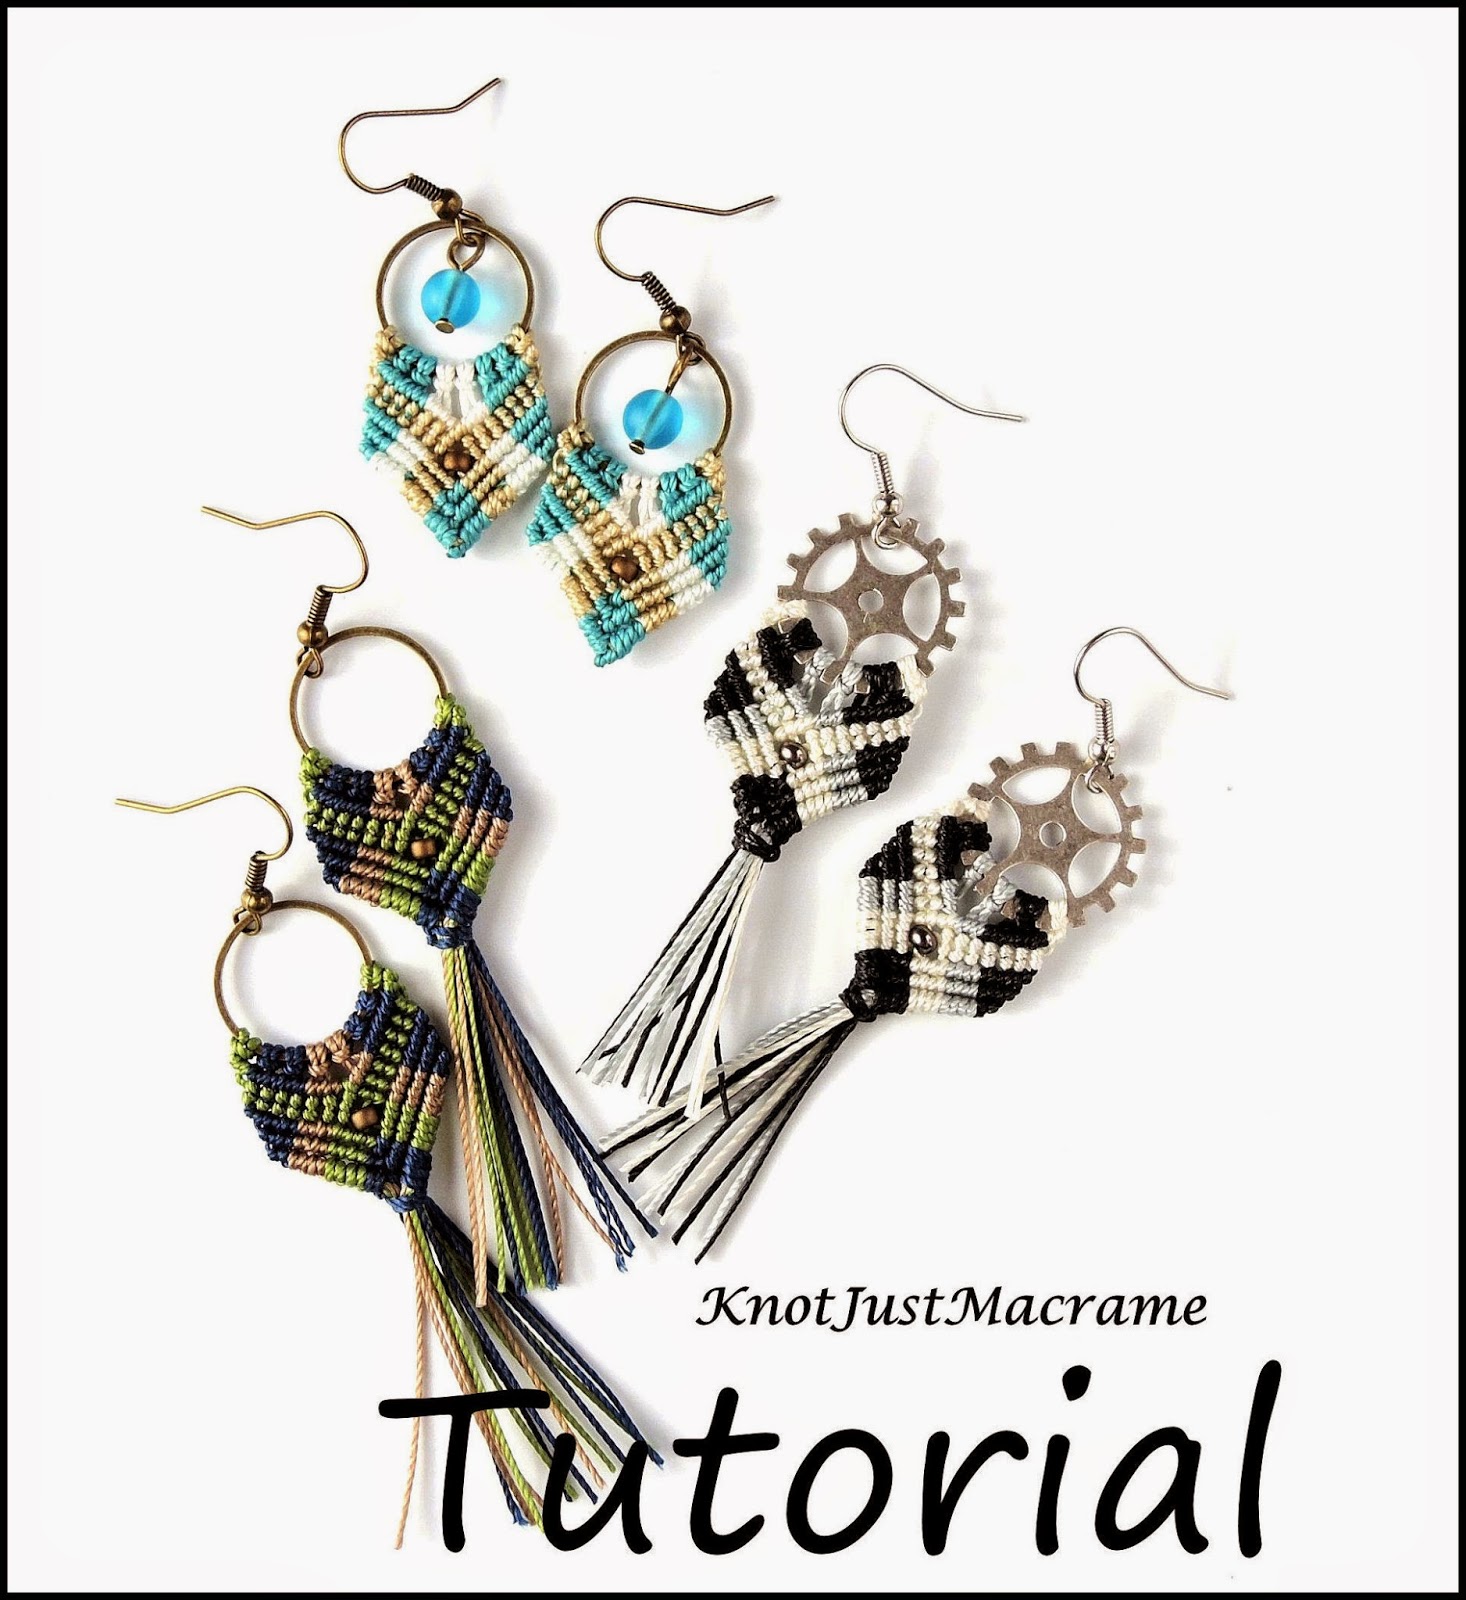 Gypsy Earrings Micro Macrame tutorial by Knot Just Macrame.